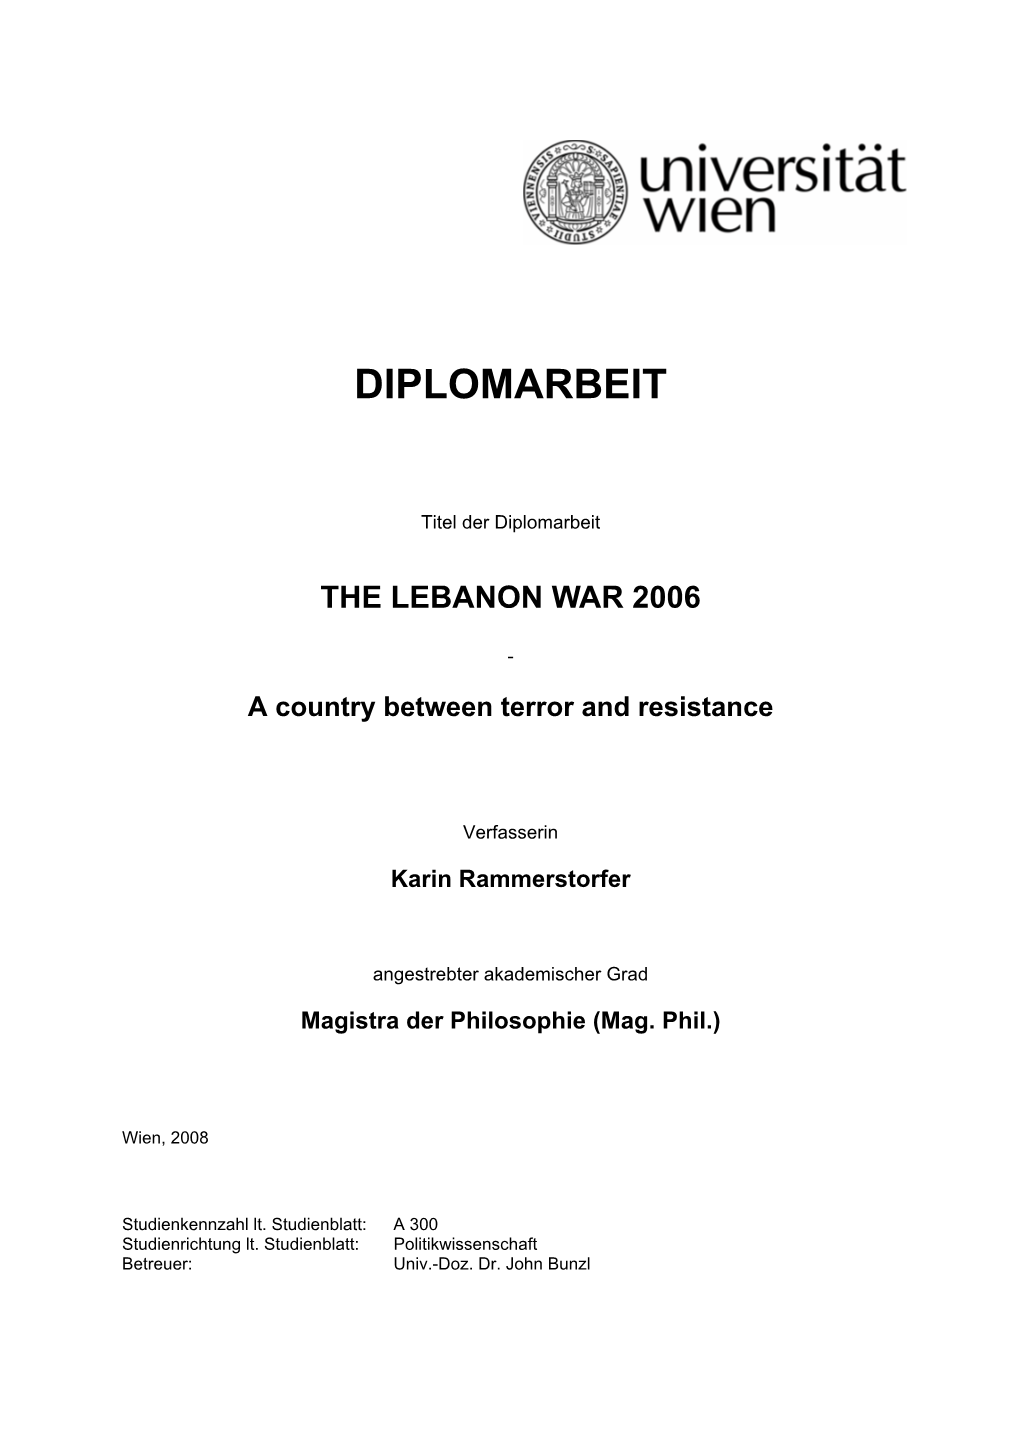 11. Reconstructing Lebanon